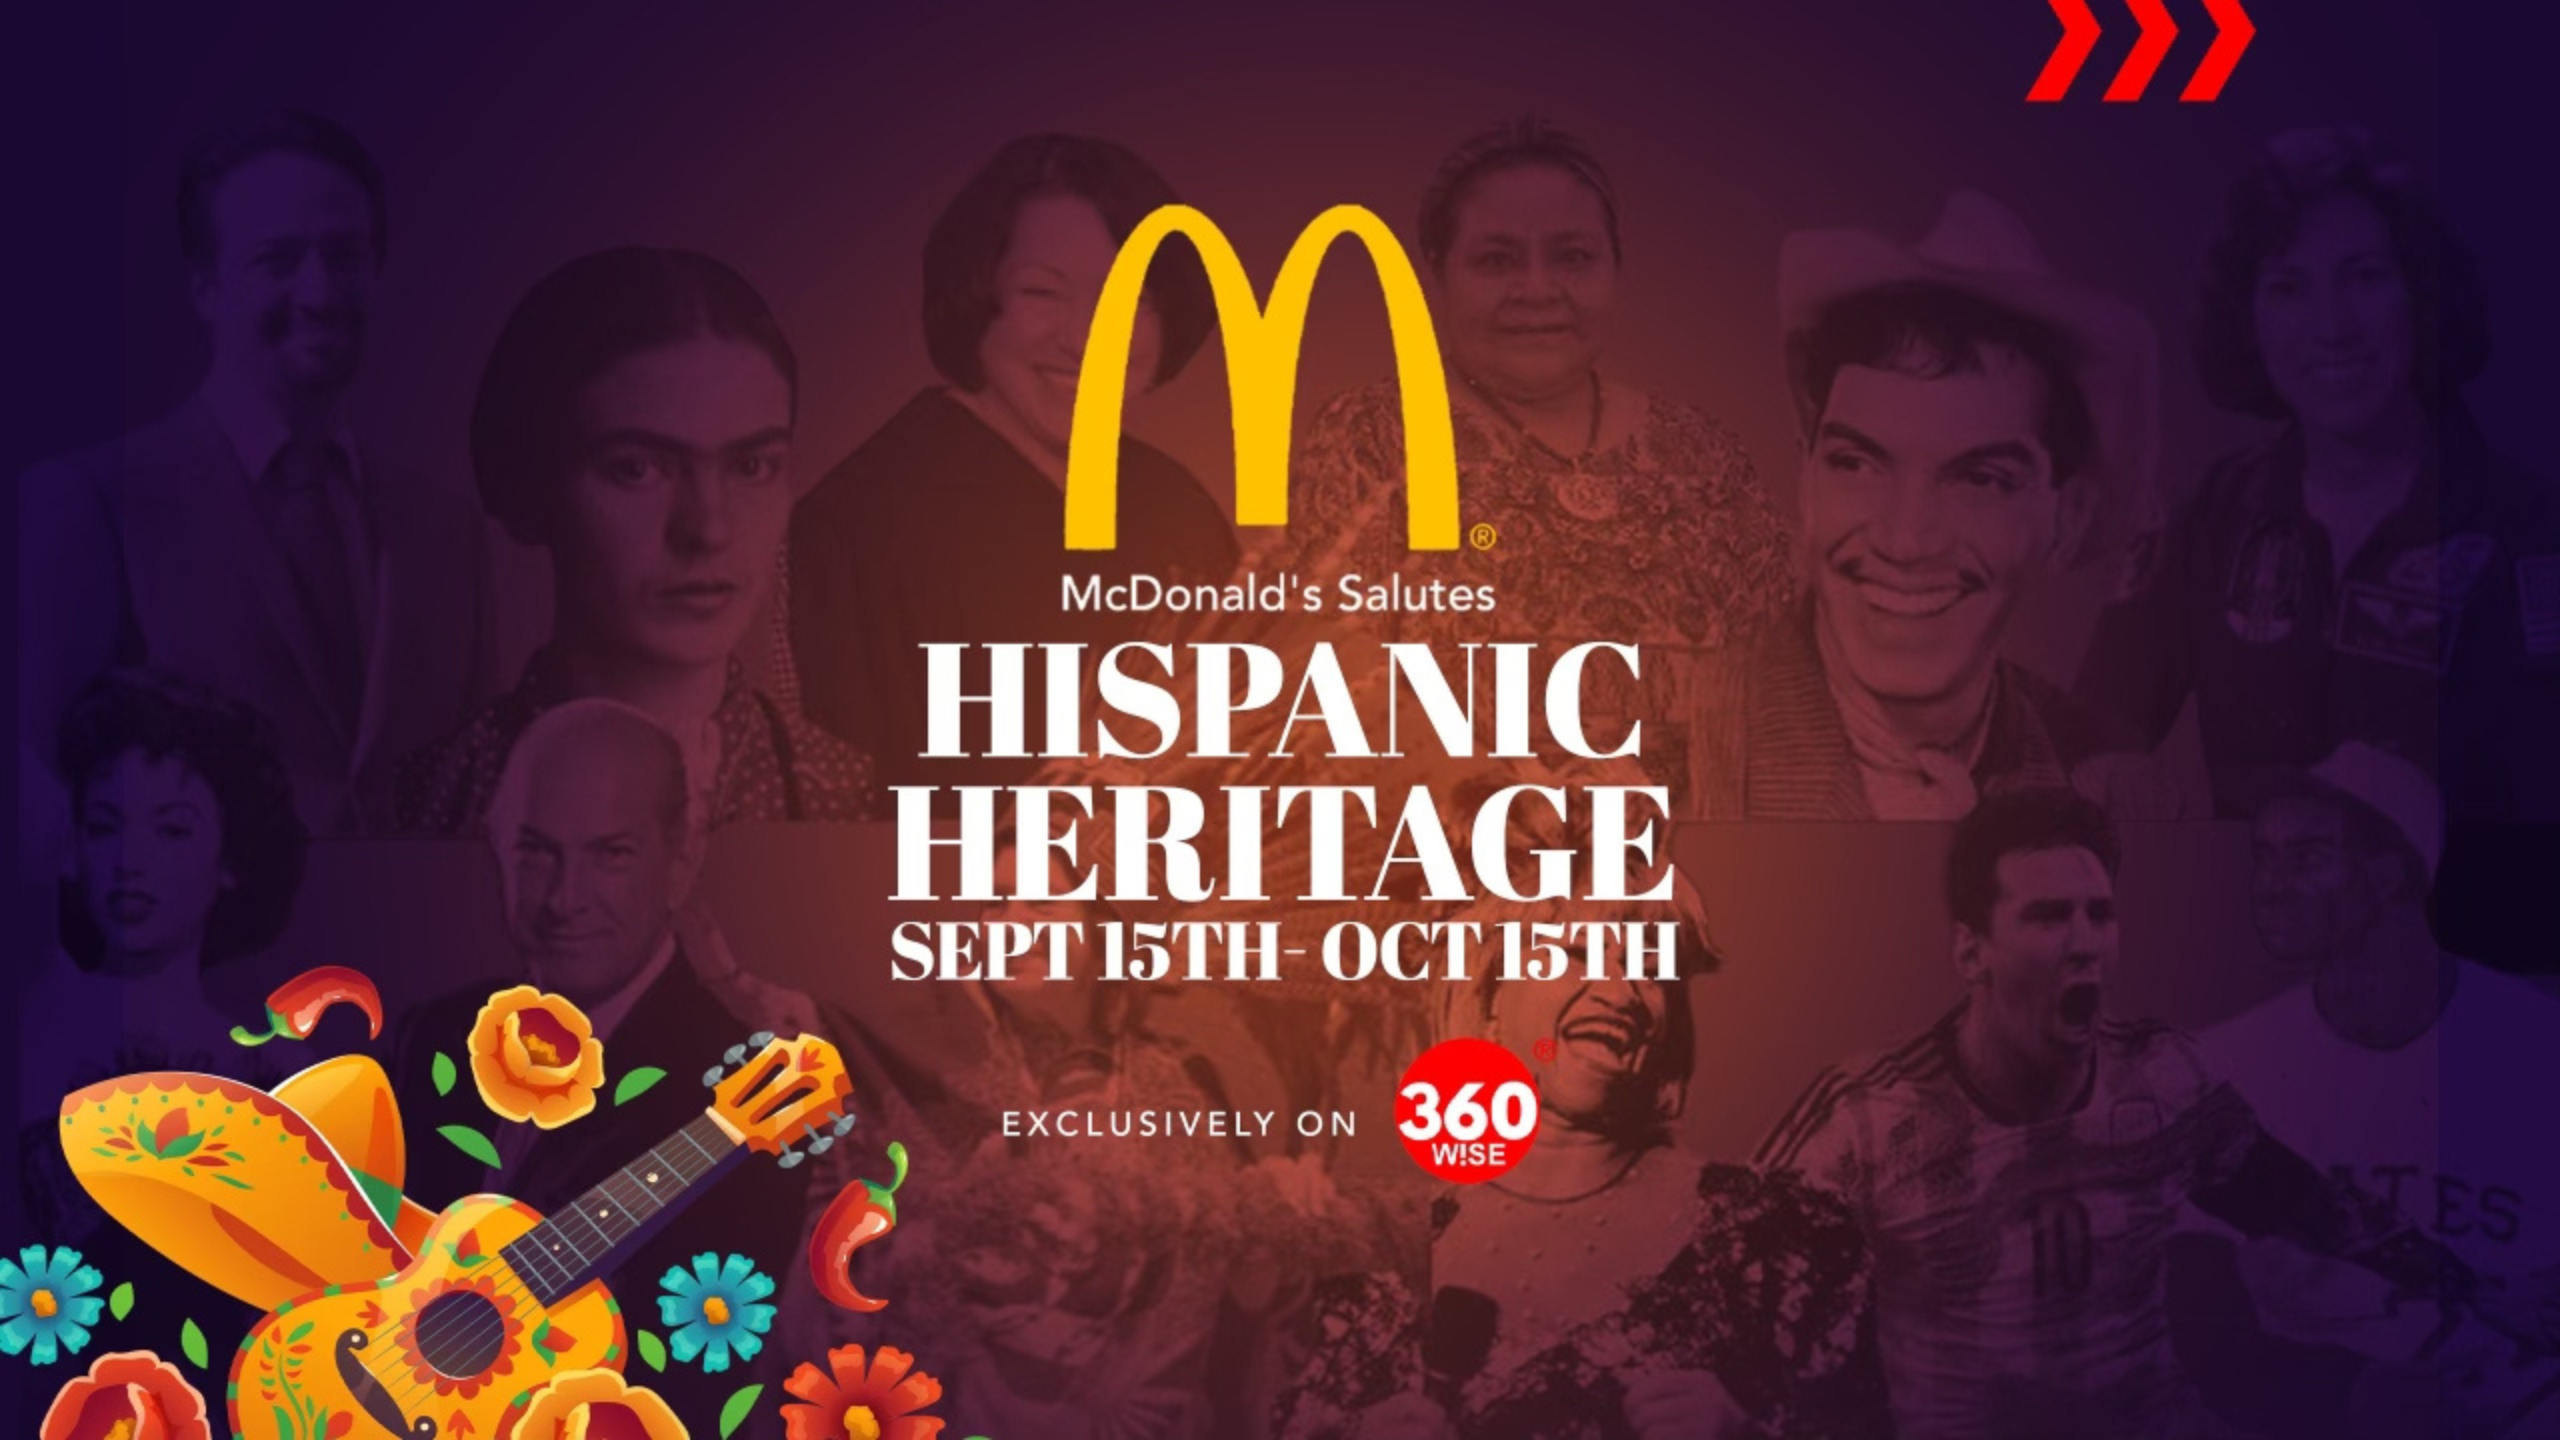 LIVE PLAY - McDonalds Salutes Hispanic Heritage 